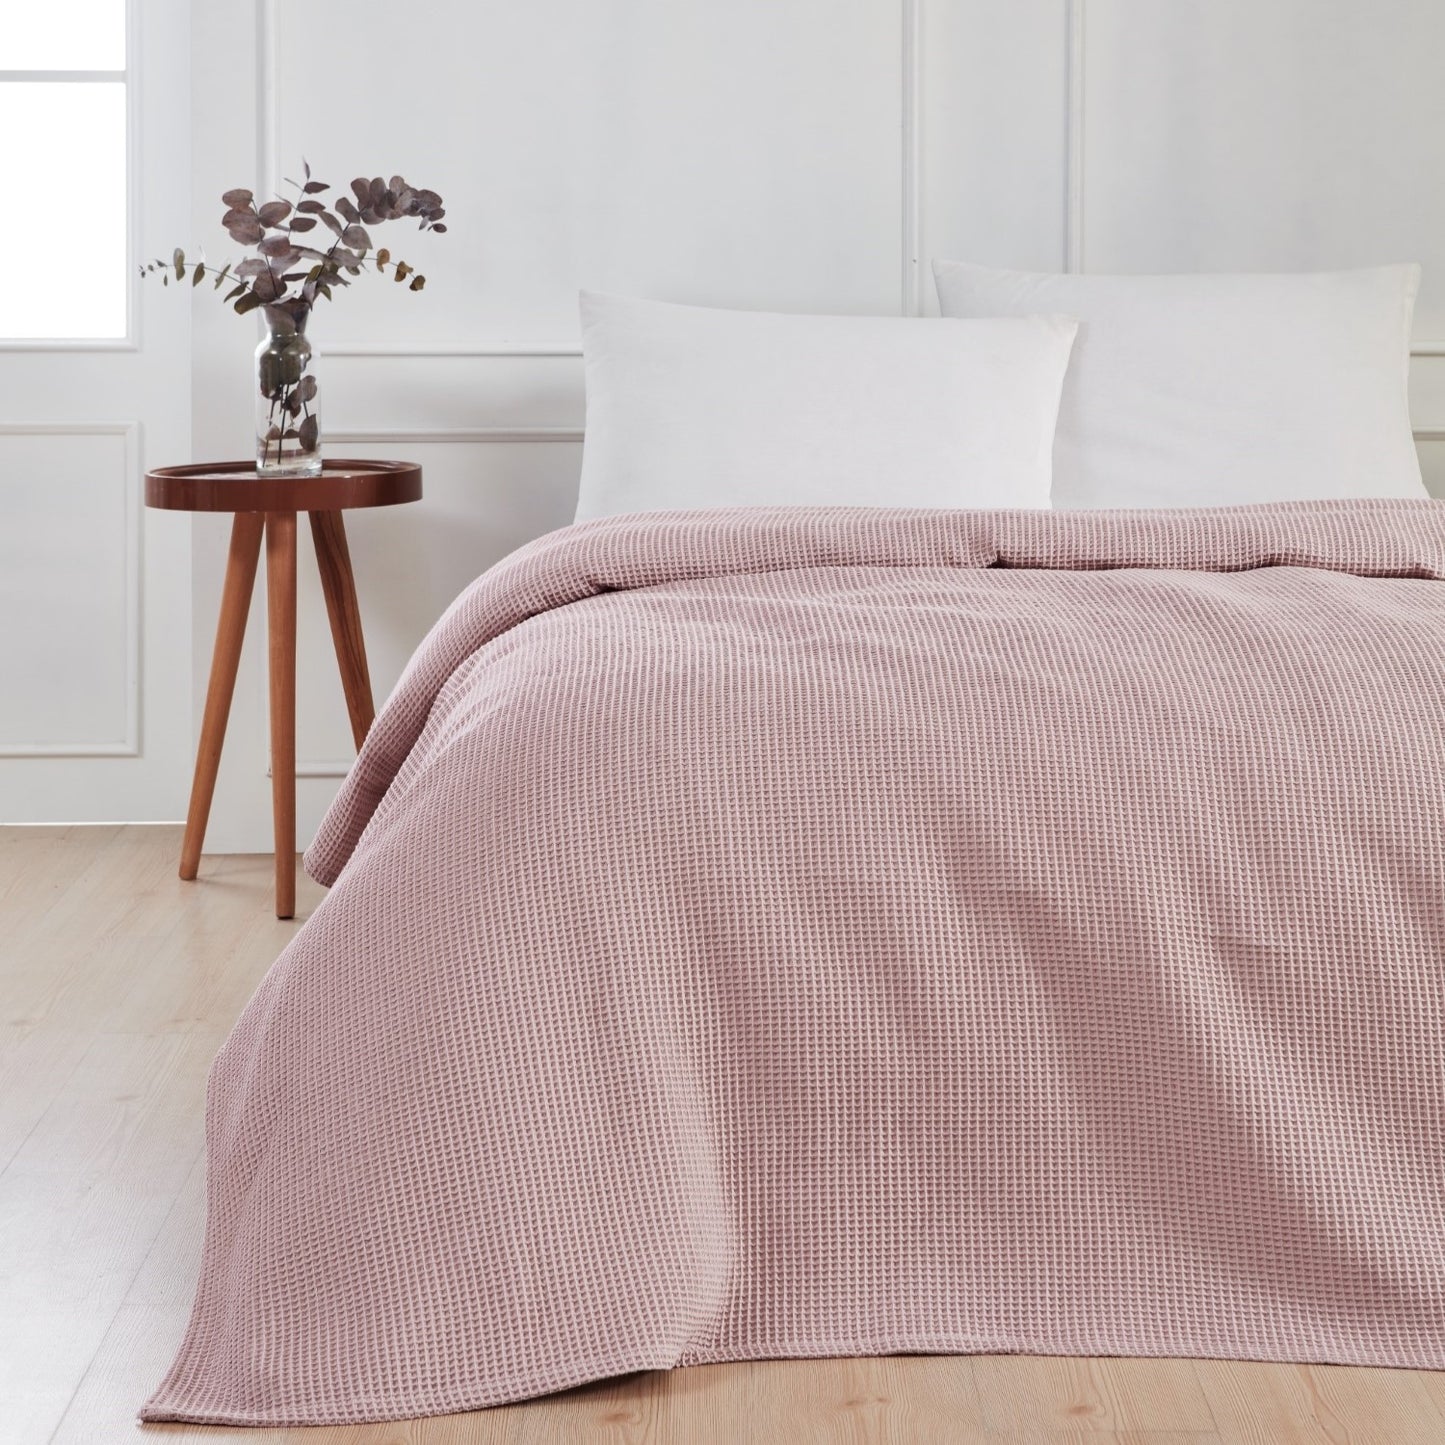 rosafarvet sengetæppe model waffle fra BySkagen 240 x 260 cm.